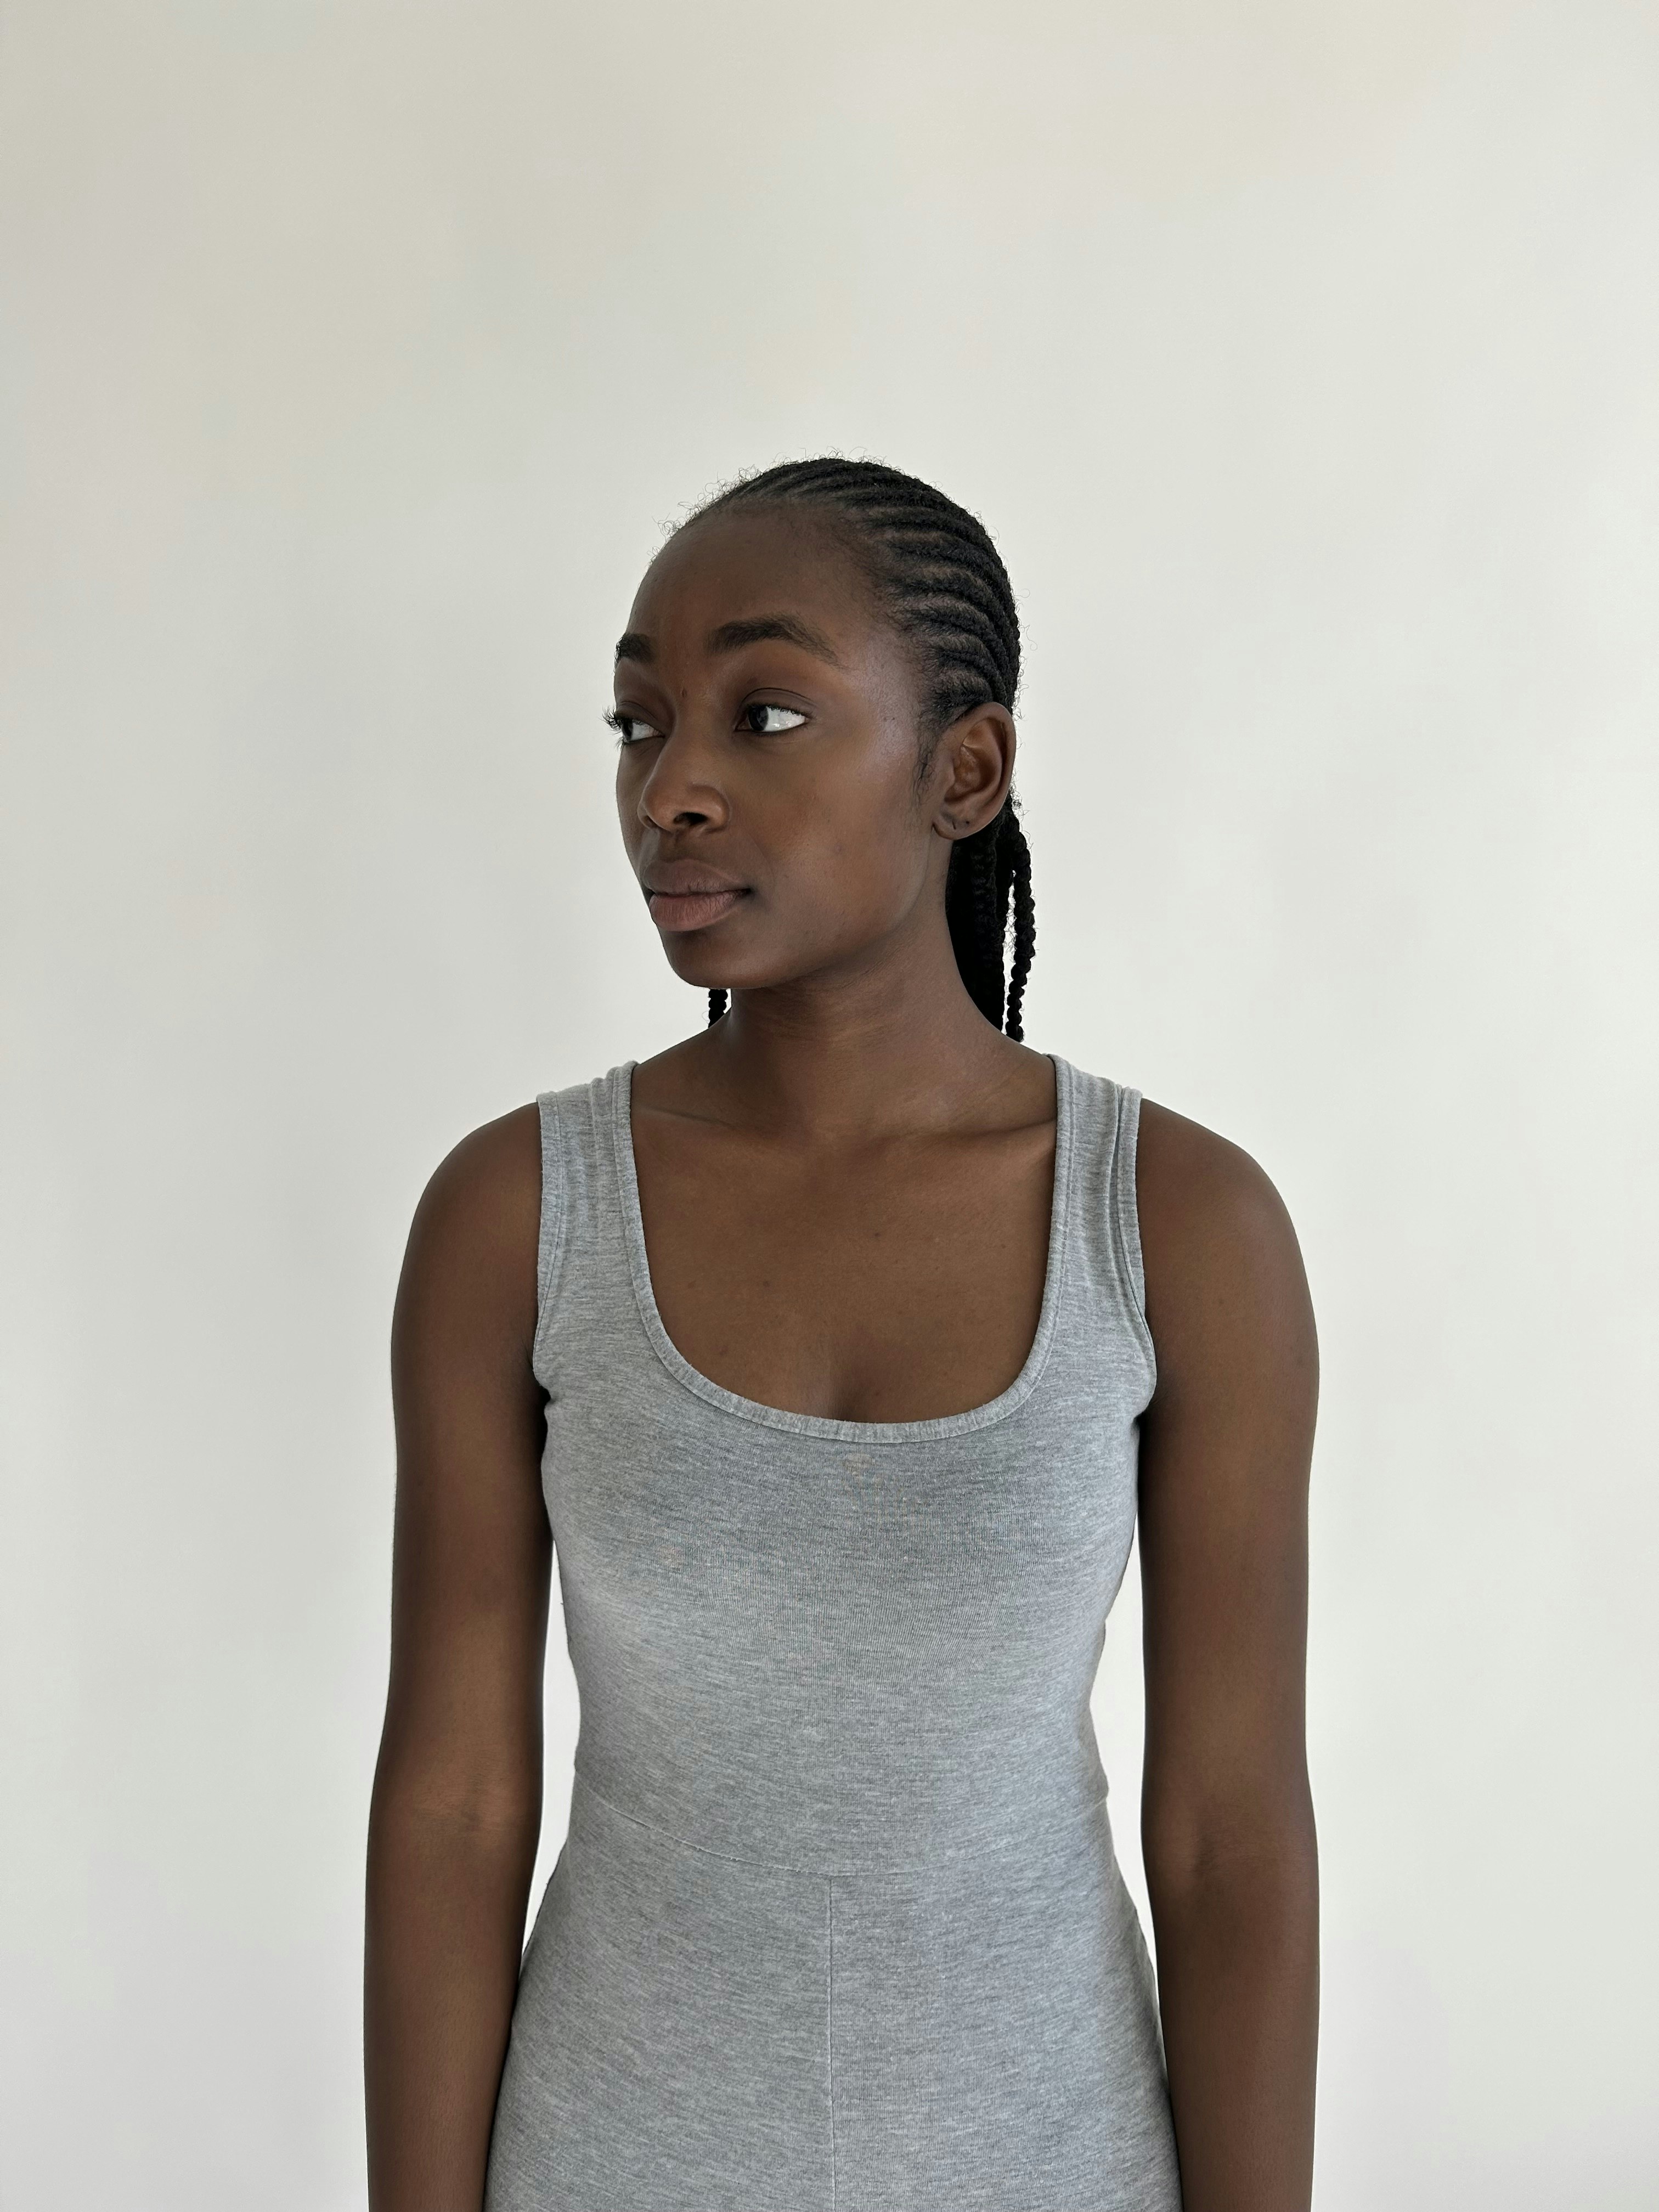 An image of Emmanuella OWUSU-ANSAH